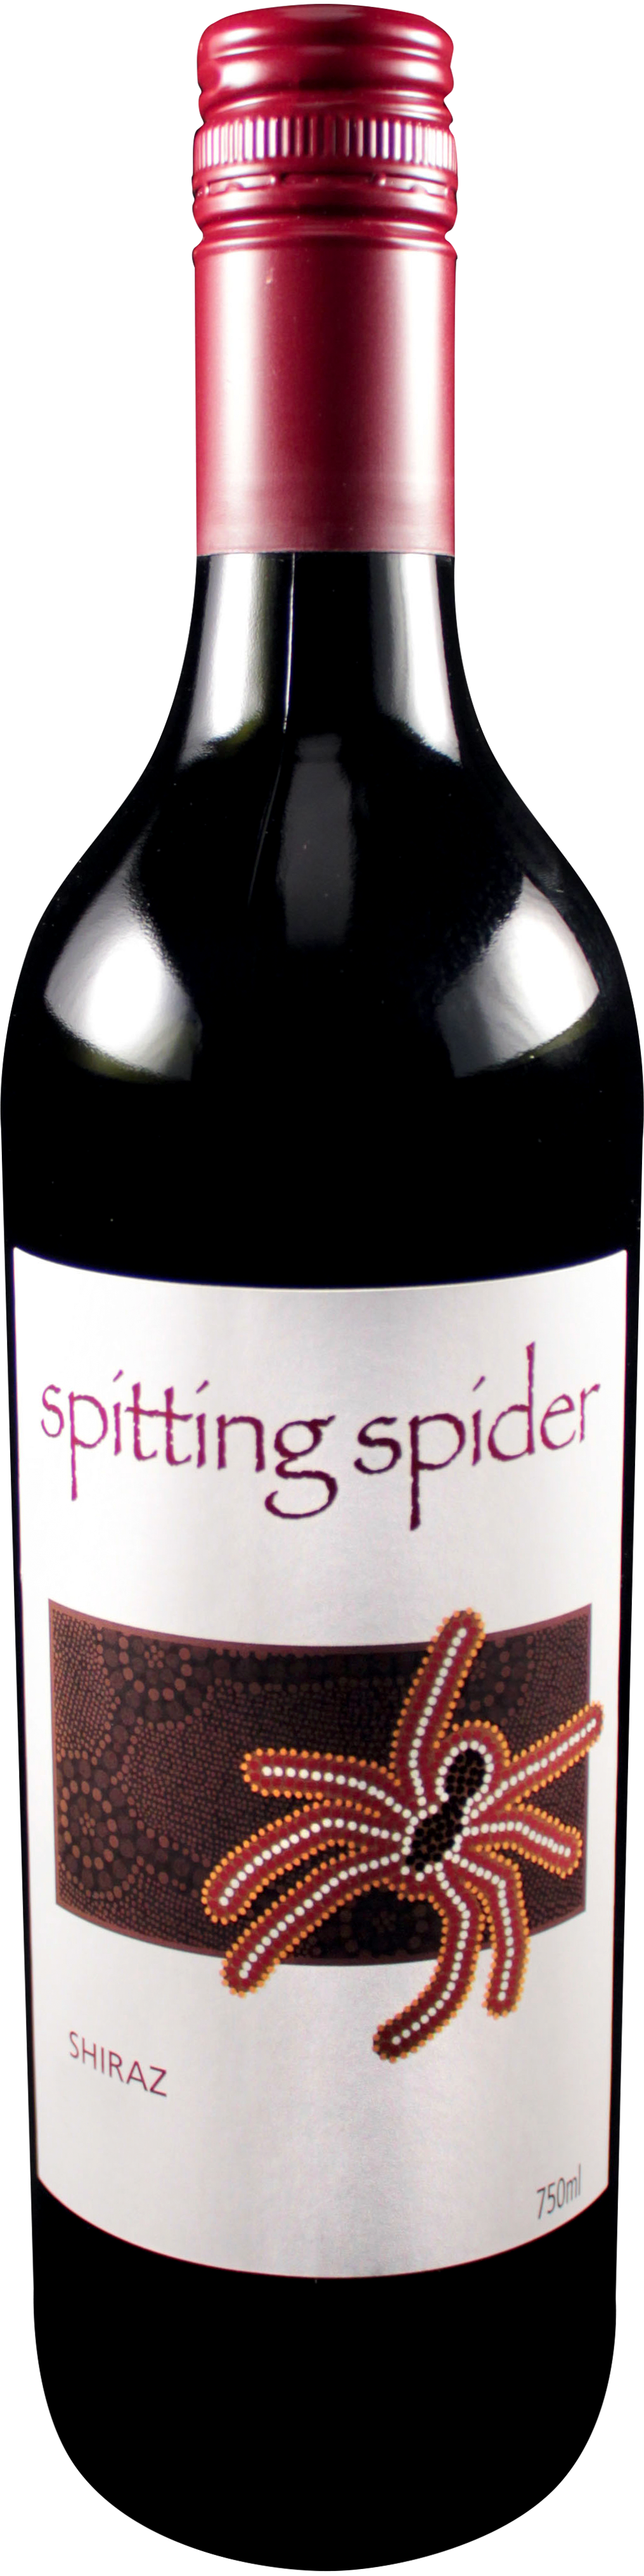 Bottle shot of 2012 Spitting Spider Shiraz